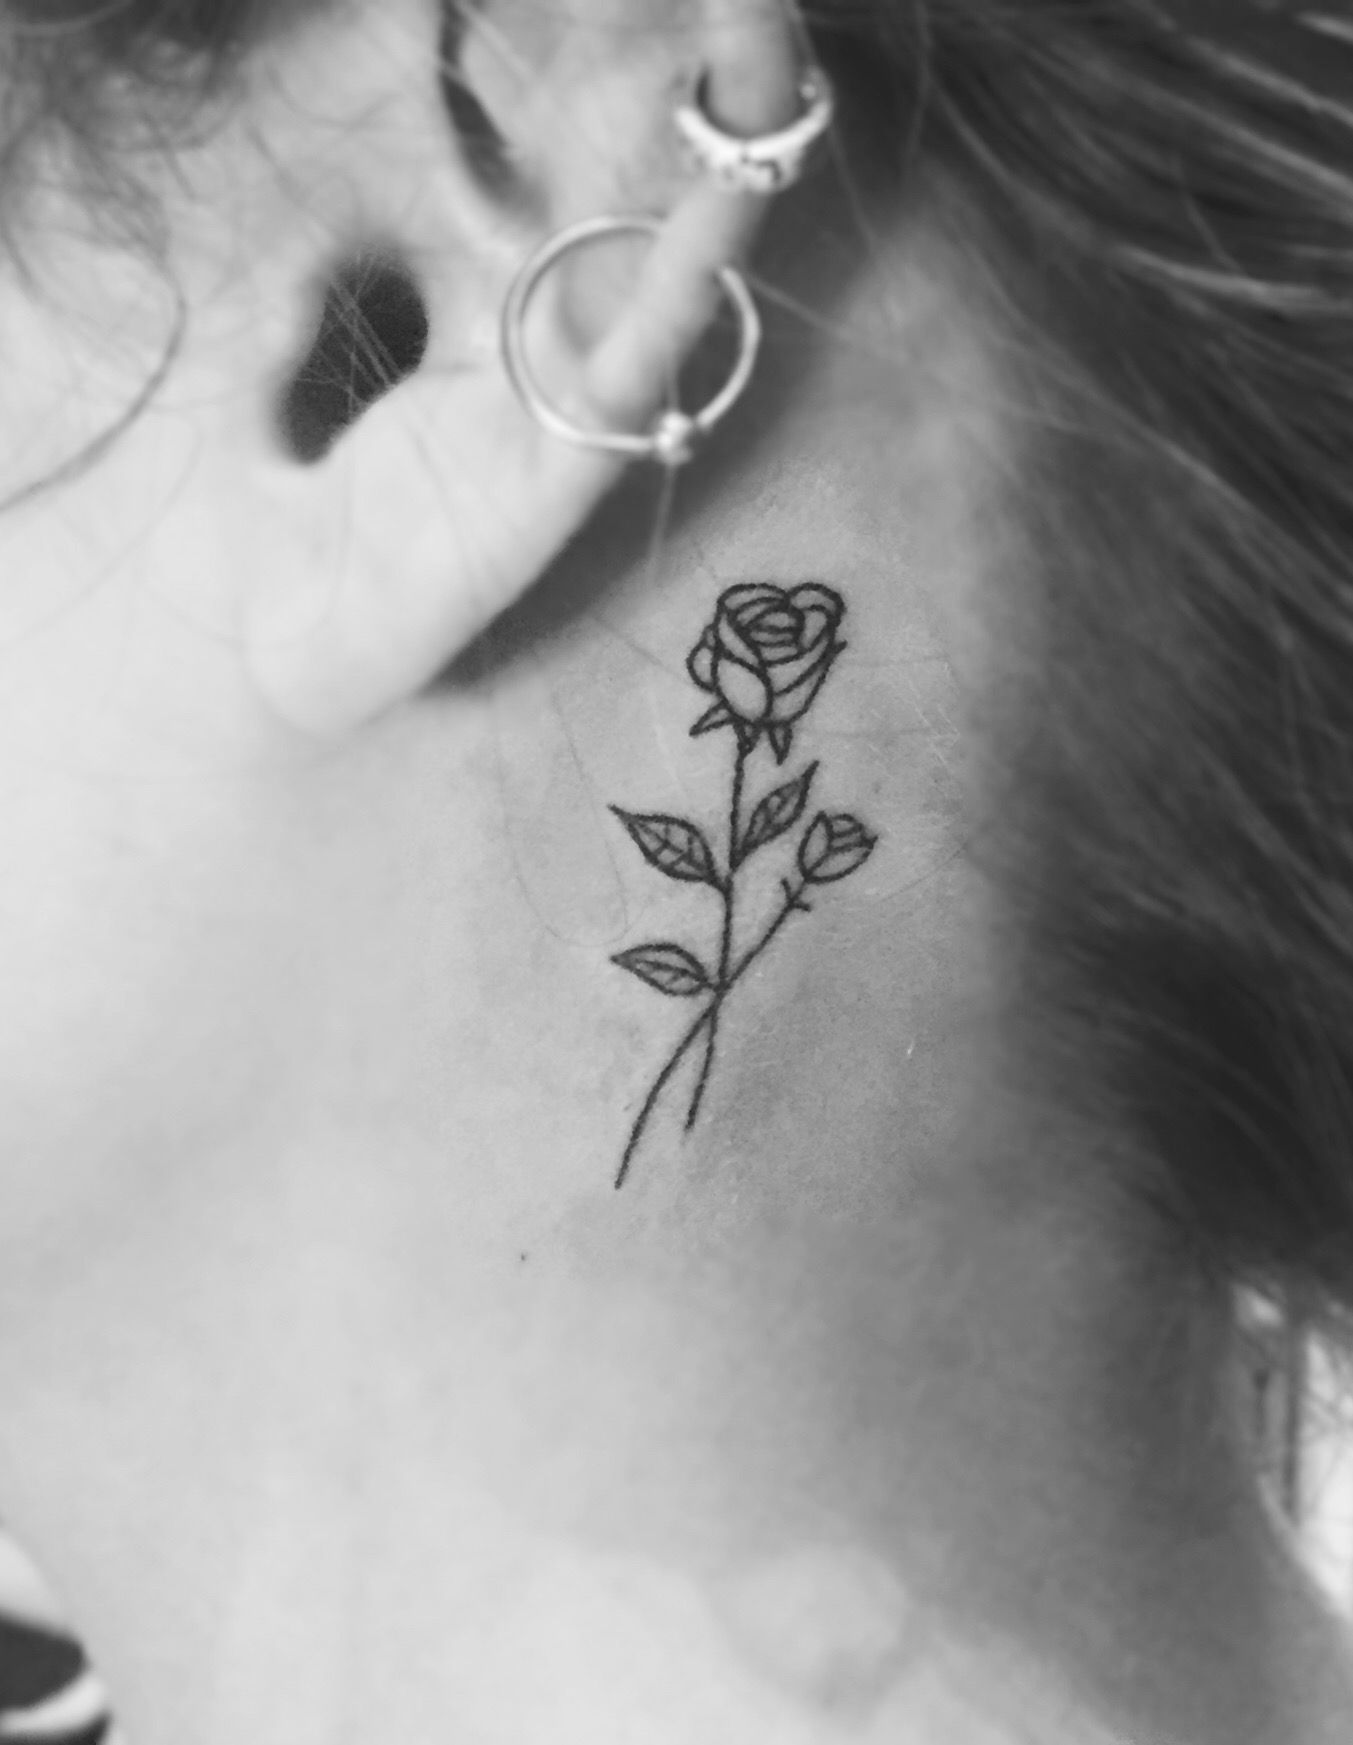 flower behind ear tattoo